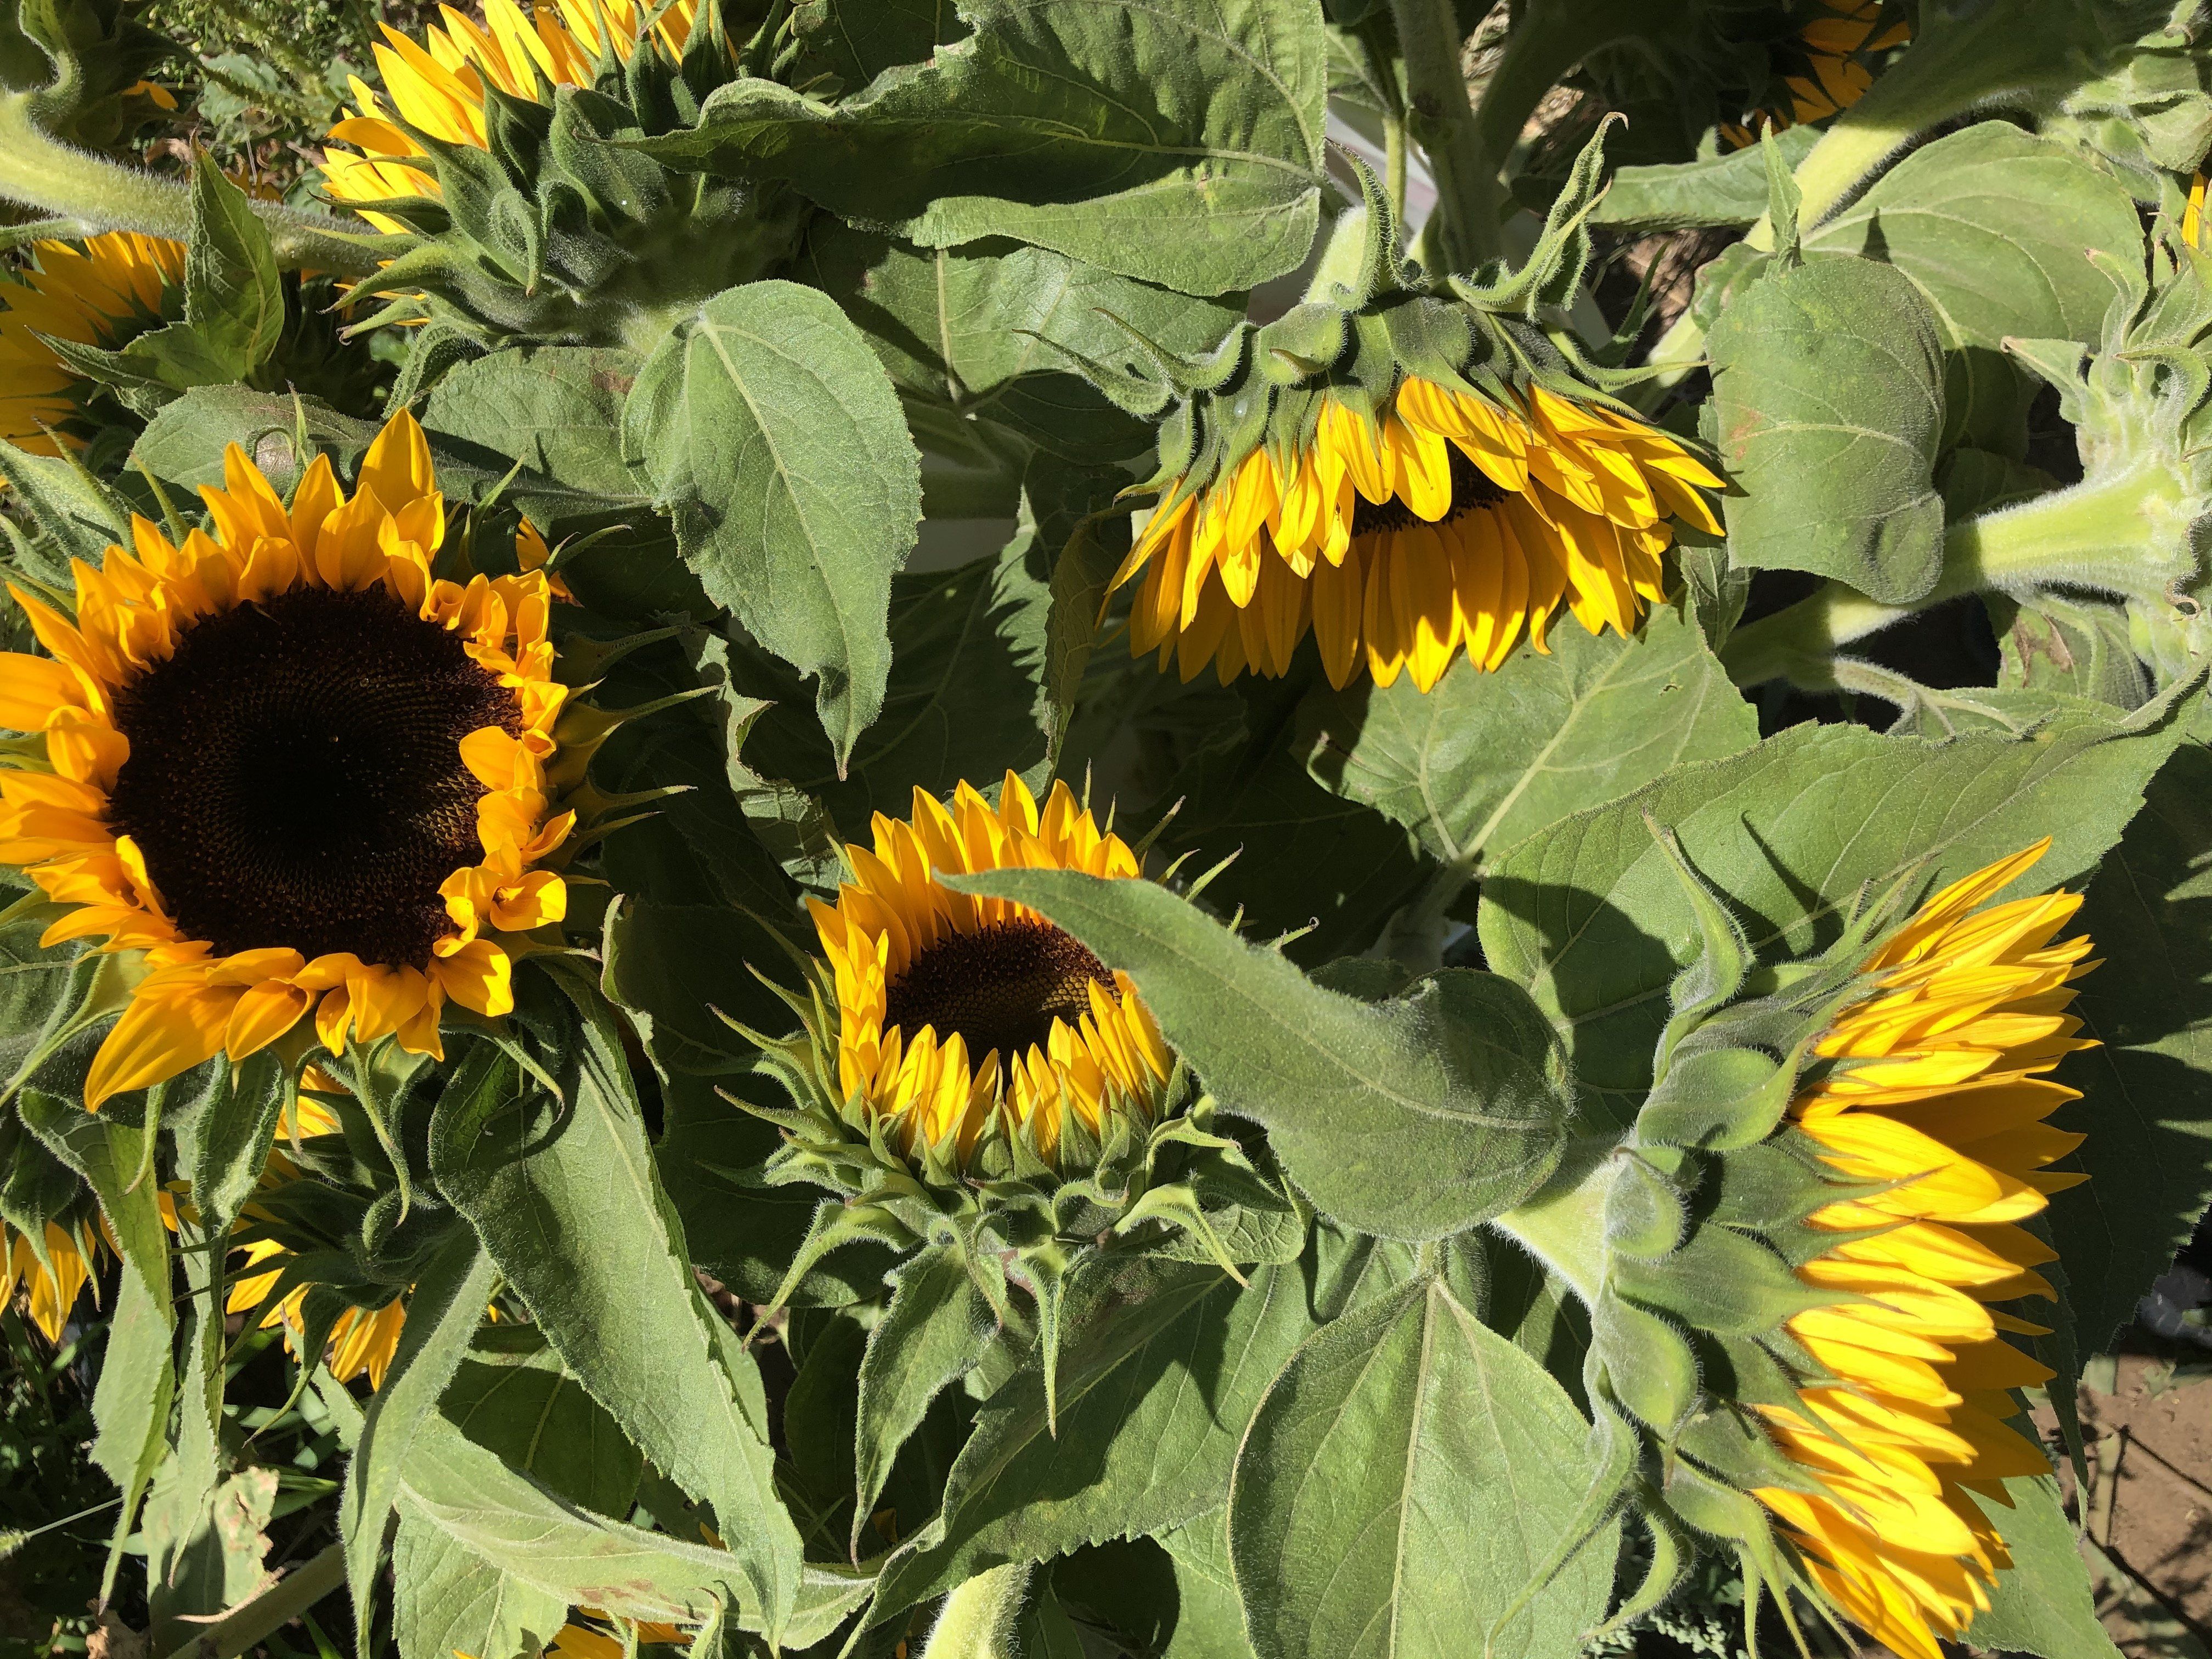 Next Happening: Sunflowers.